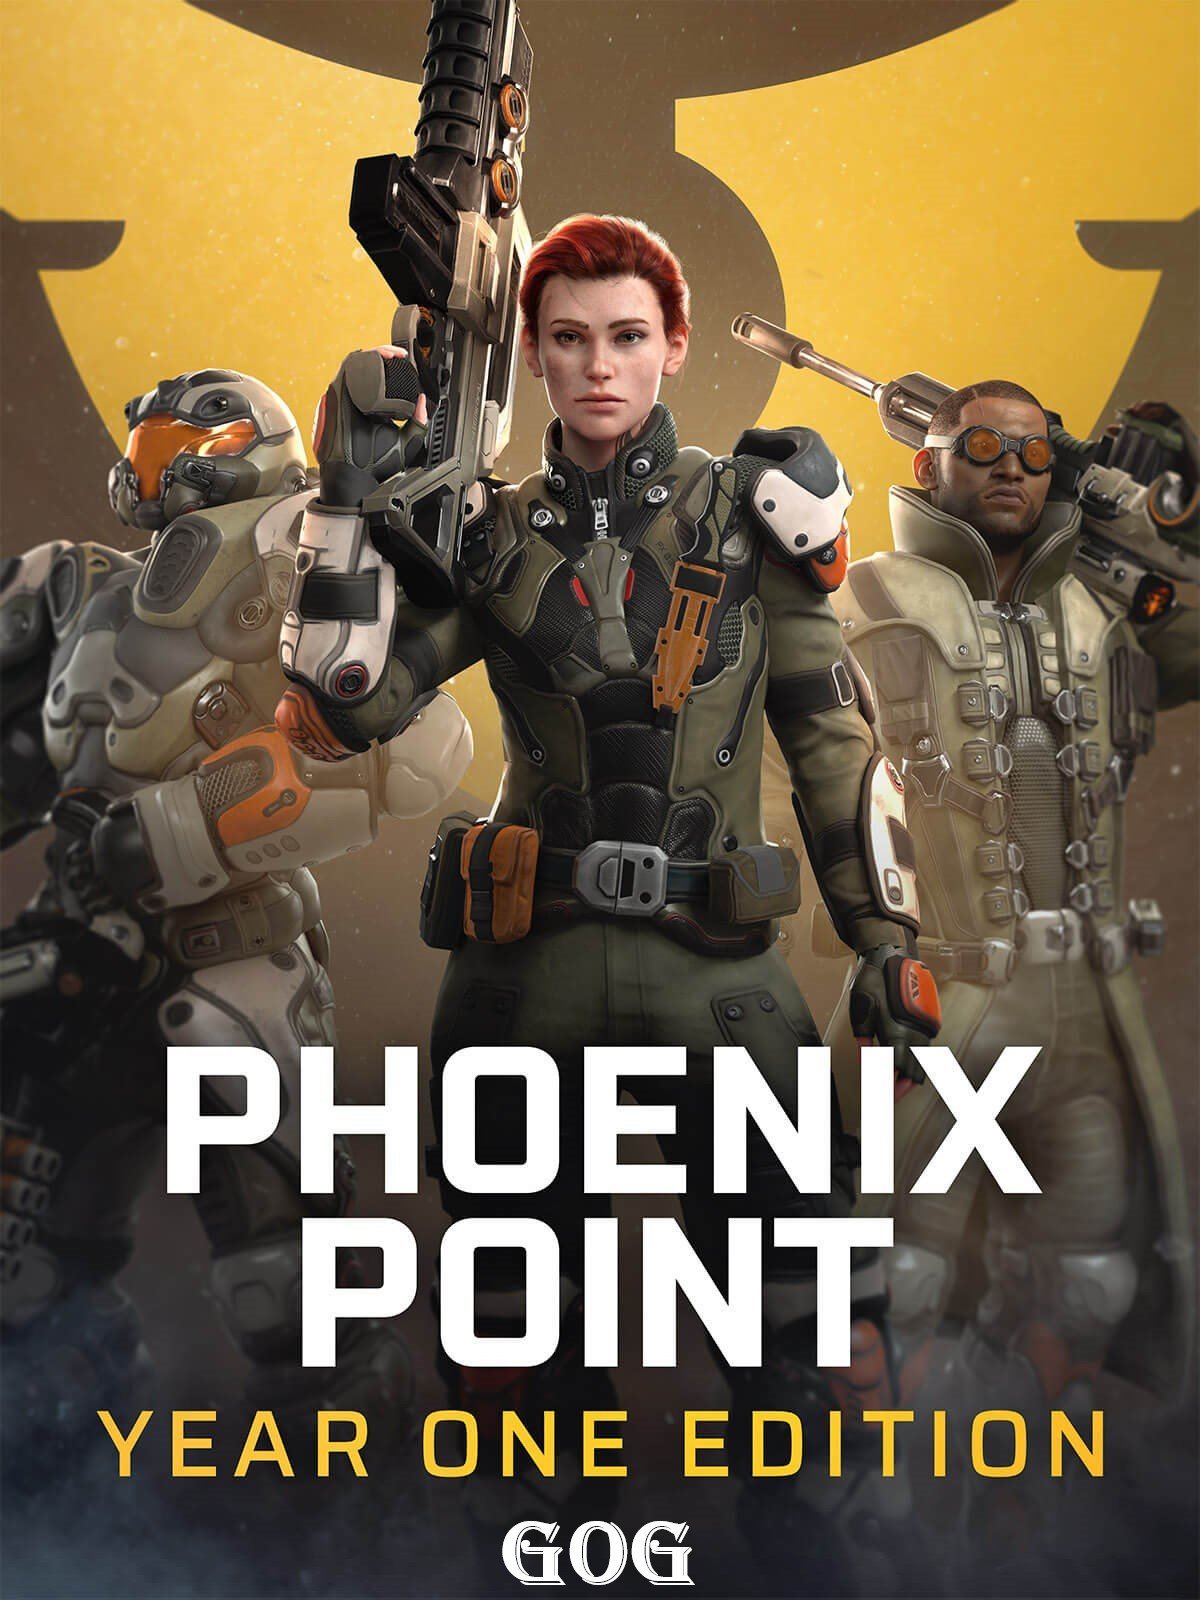 Phoenix Point: Year One Edition v.1.10 [GOG] (2019) Лицензия